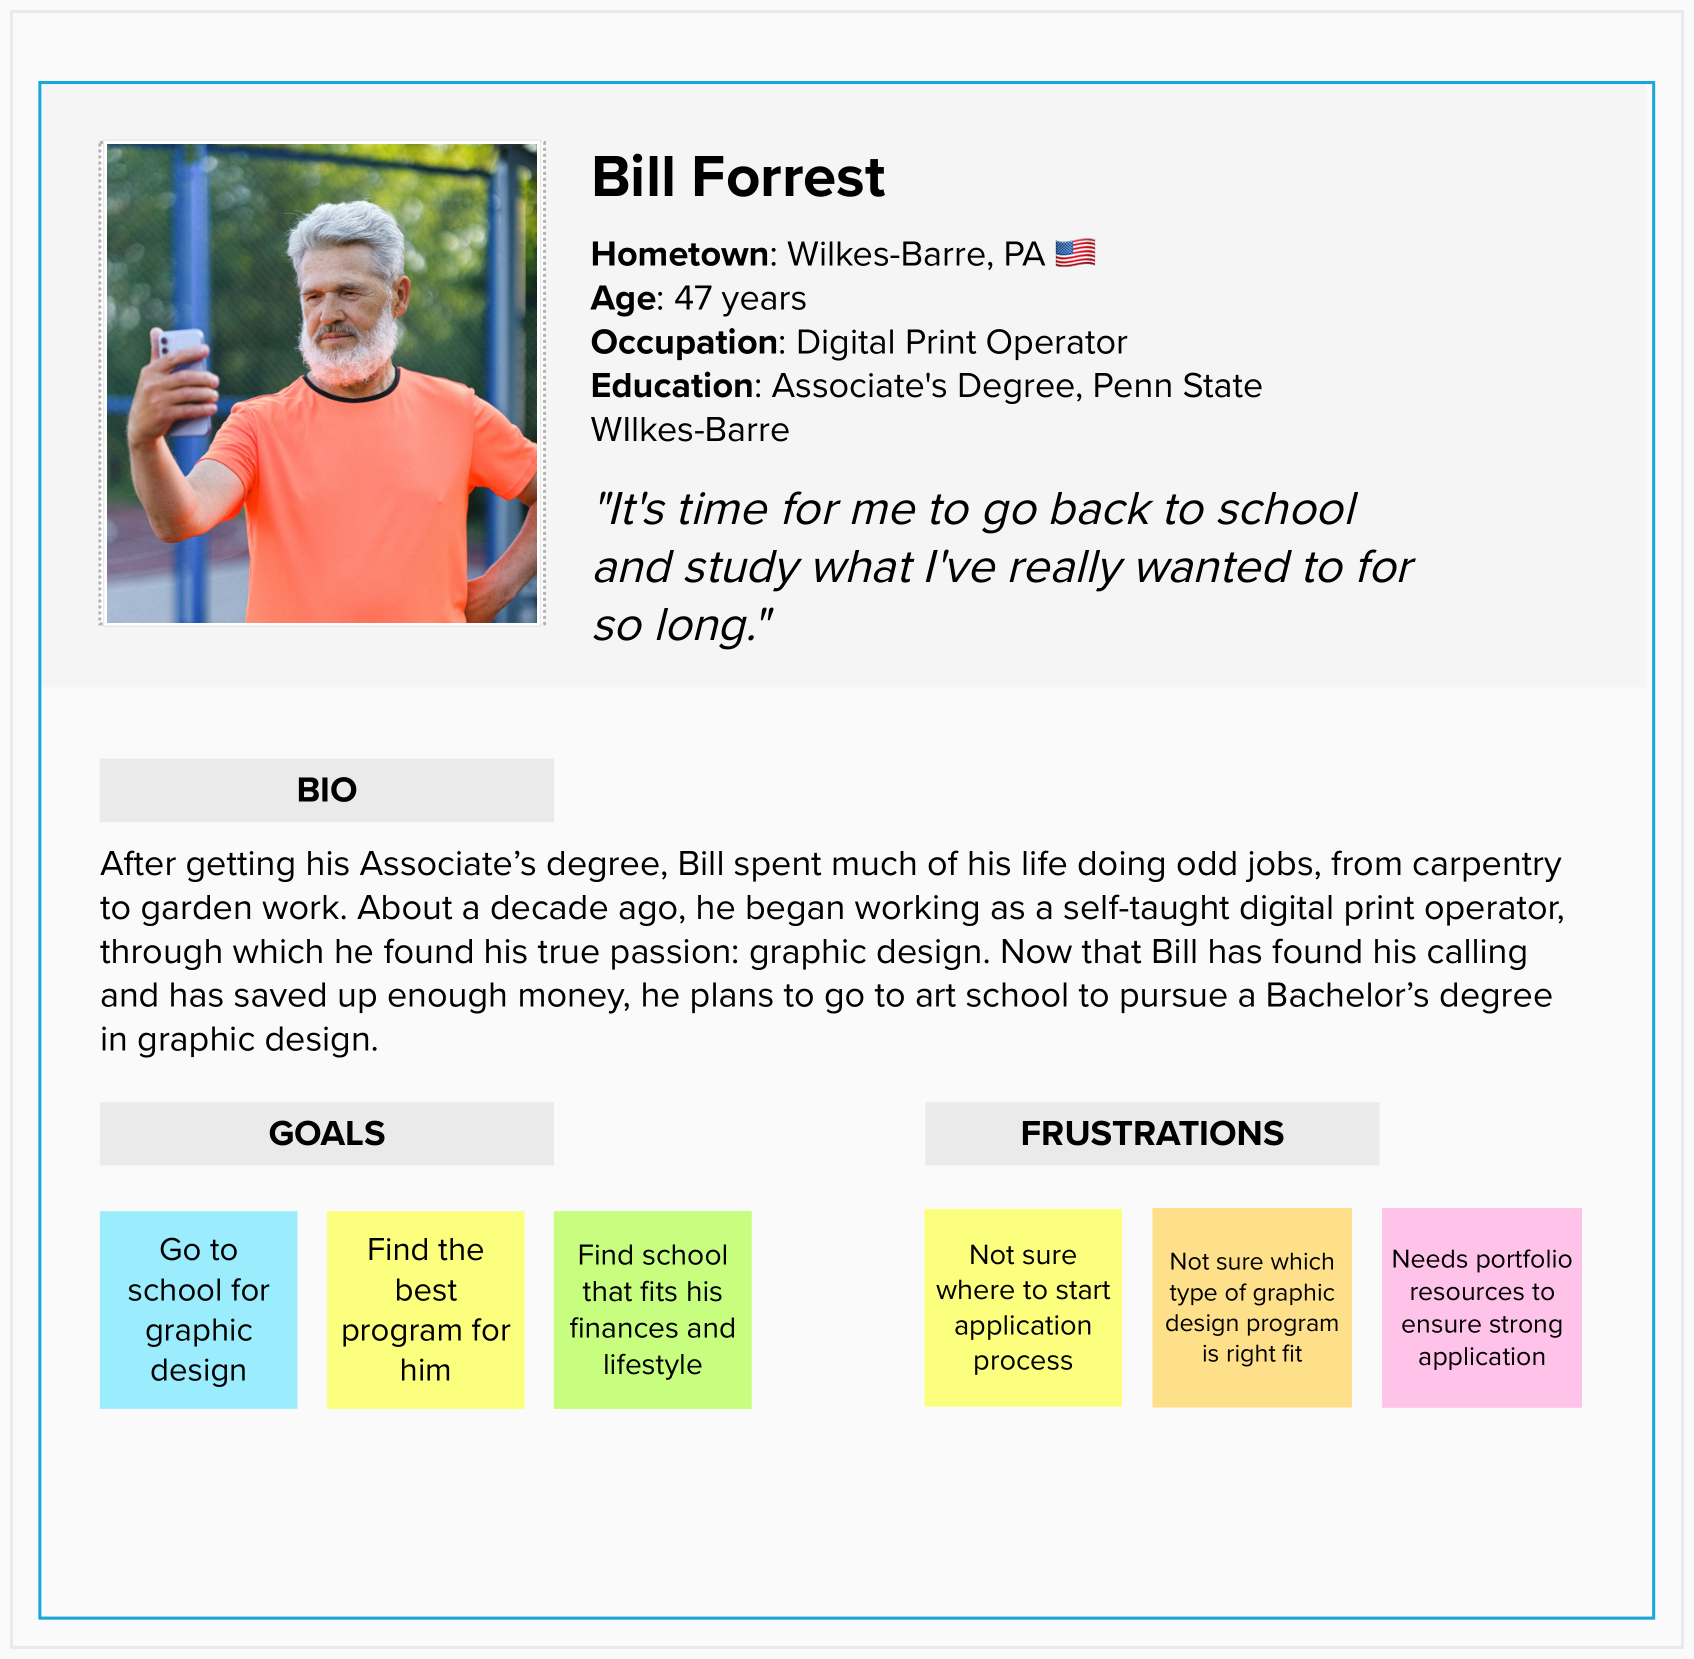 Persona 2: Bill Forrest